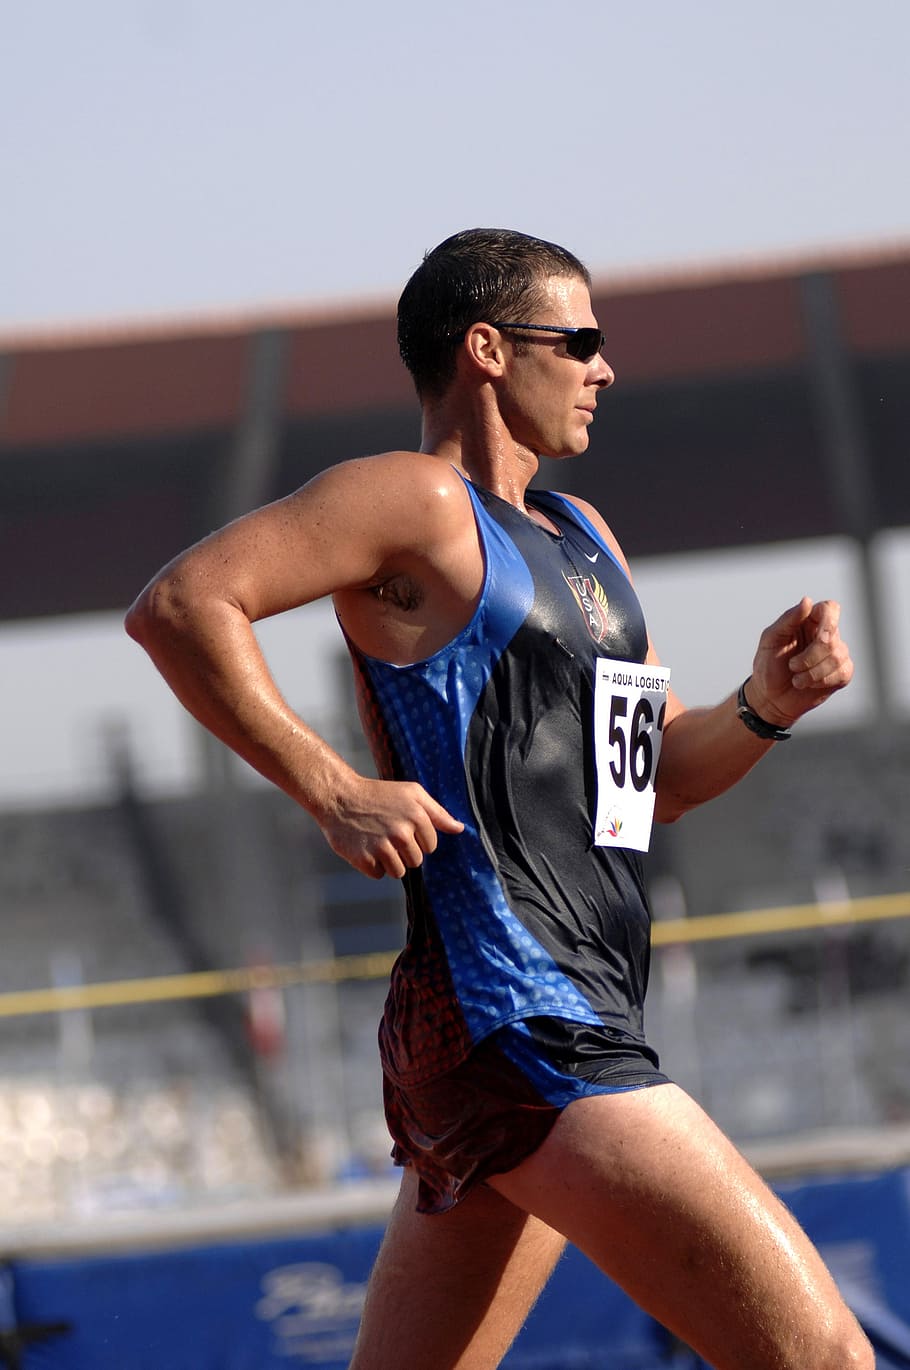 man running on field, runner, marathon, male, competition, race